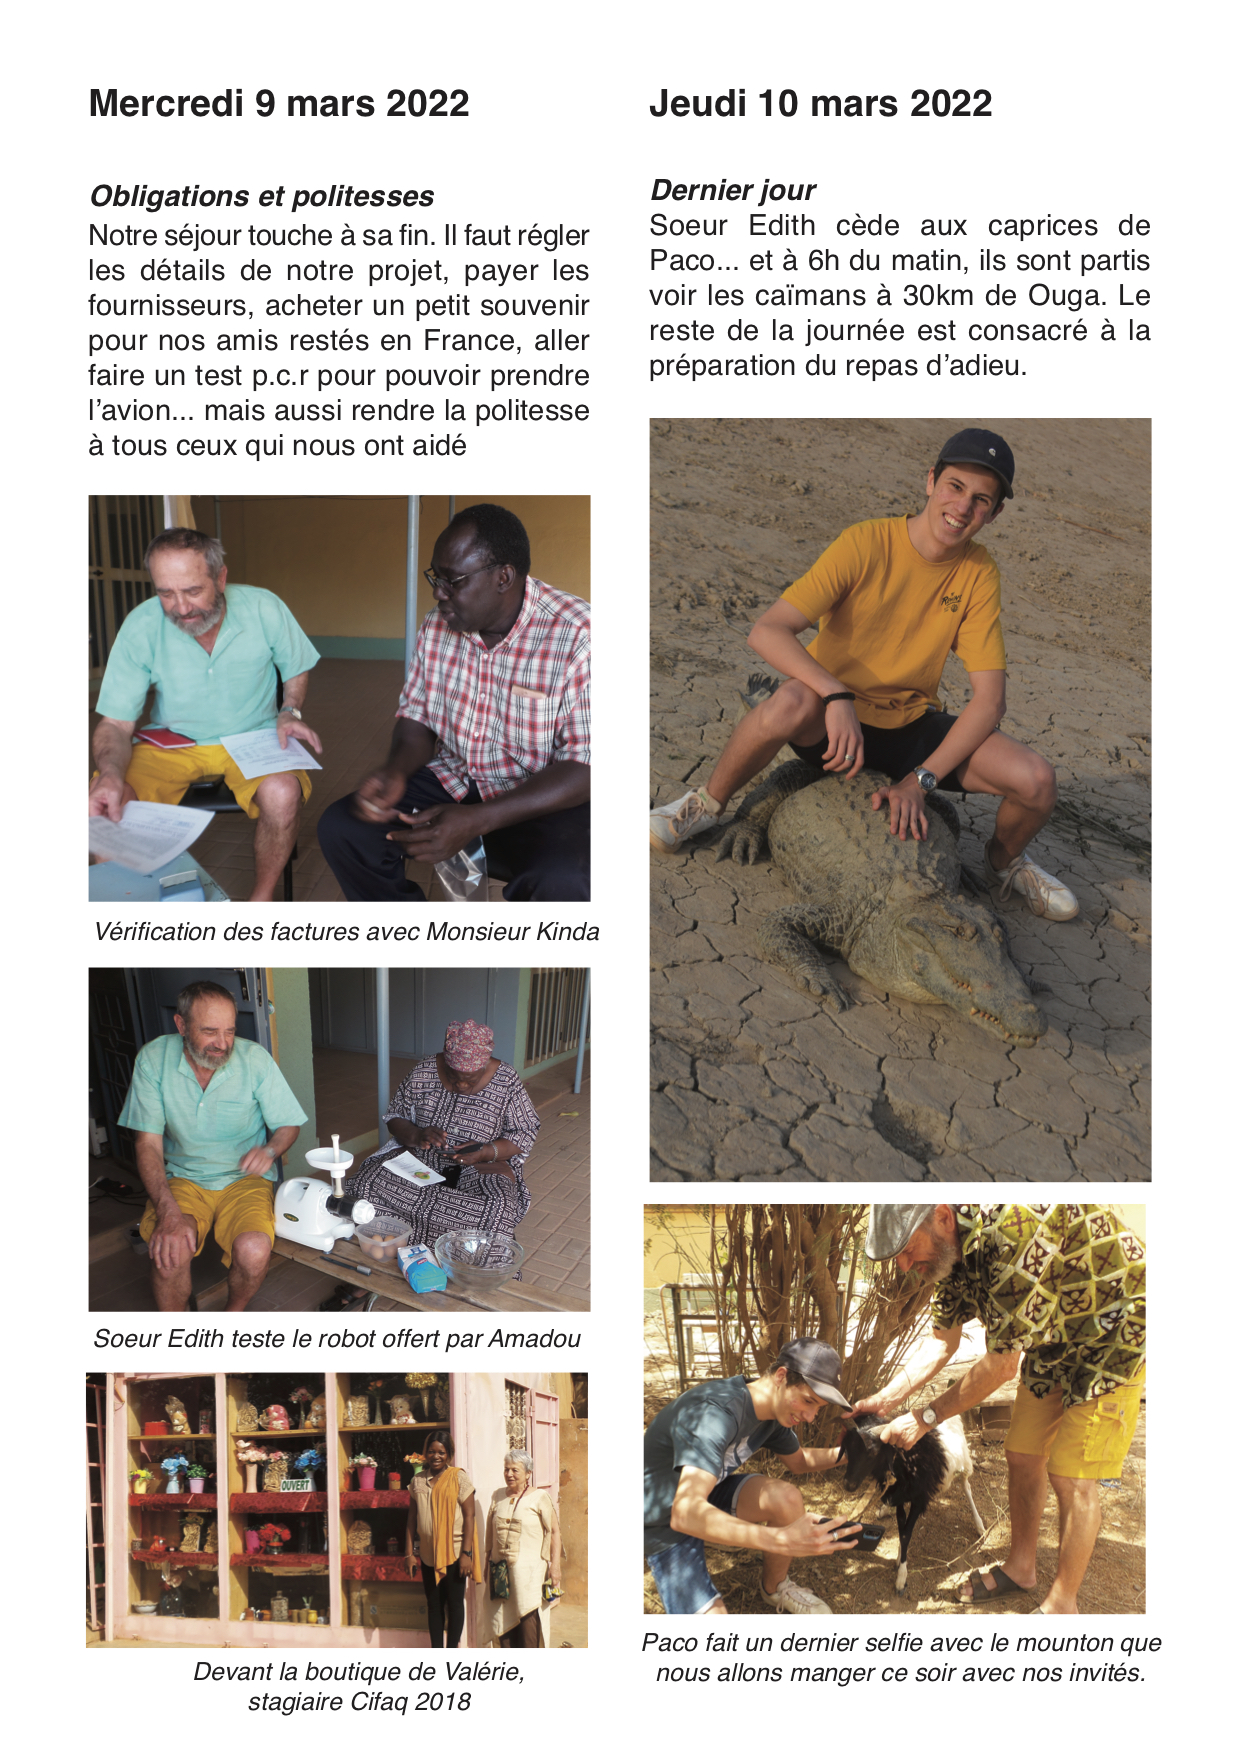 Journal de voyage au Burkina Faso - Mardi 8 au jeudi 10 mars 2022 - page 2